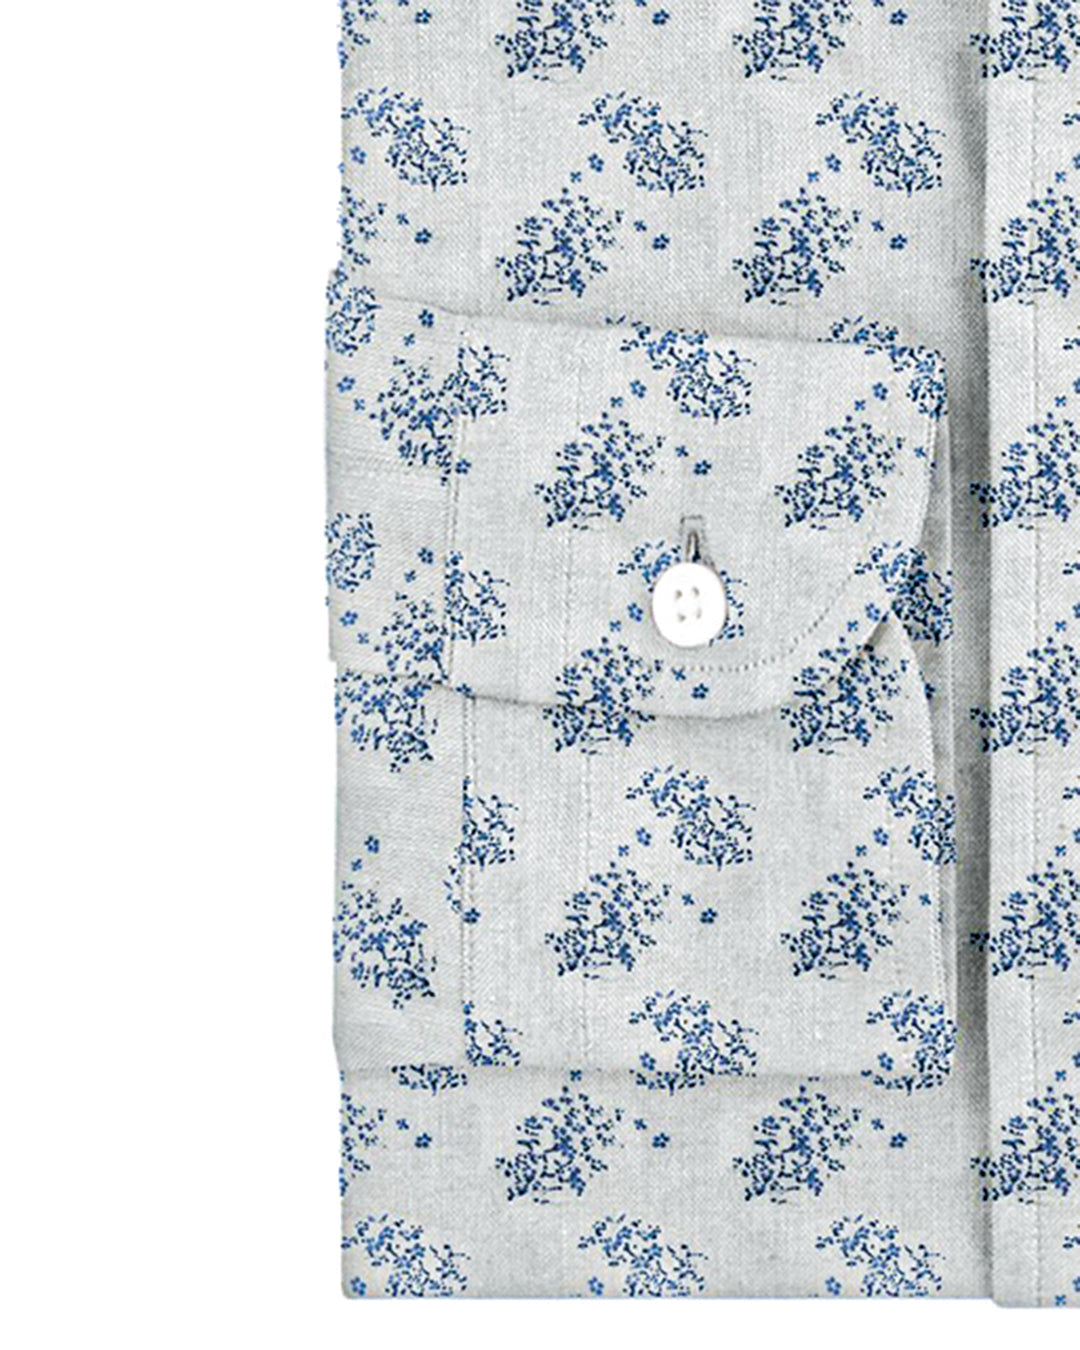 Cuff of custom linen shirt for men in pale blue printed shrubs